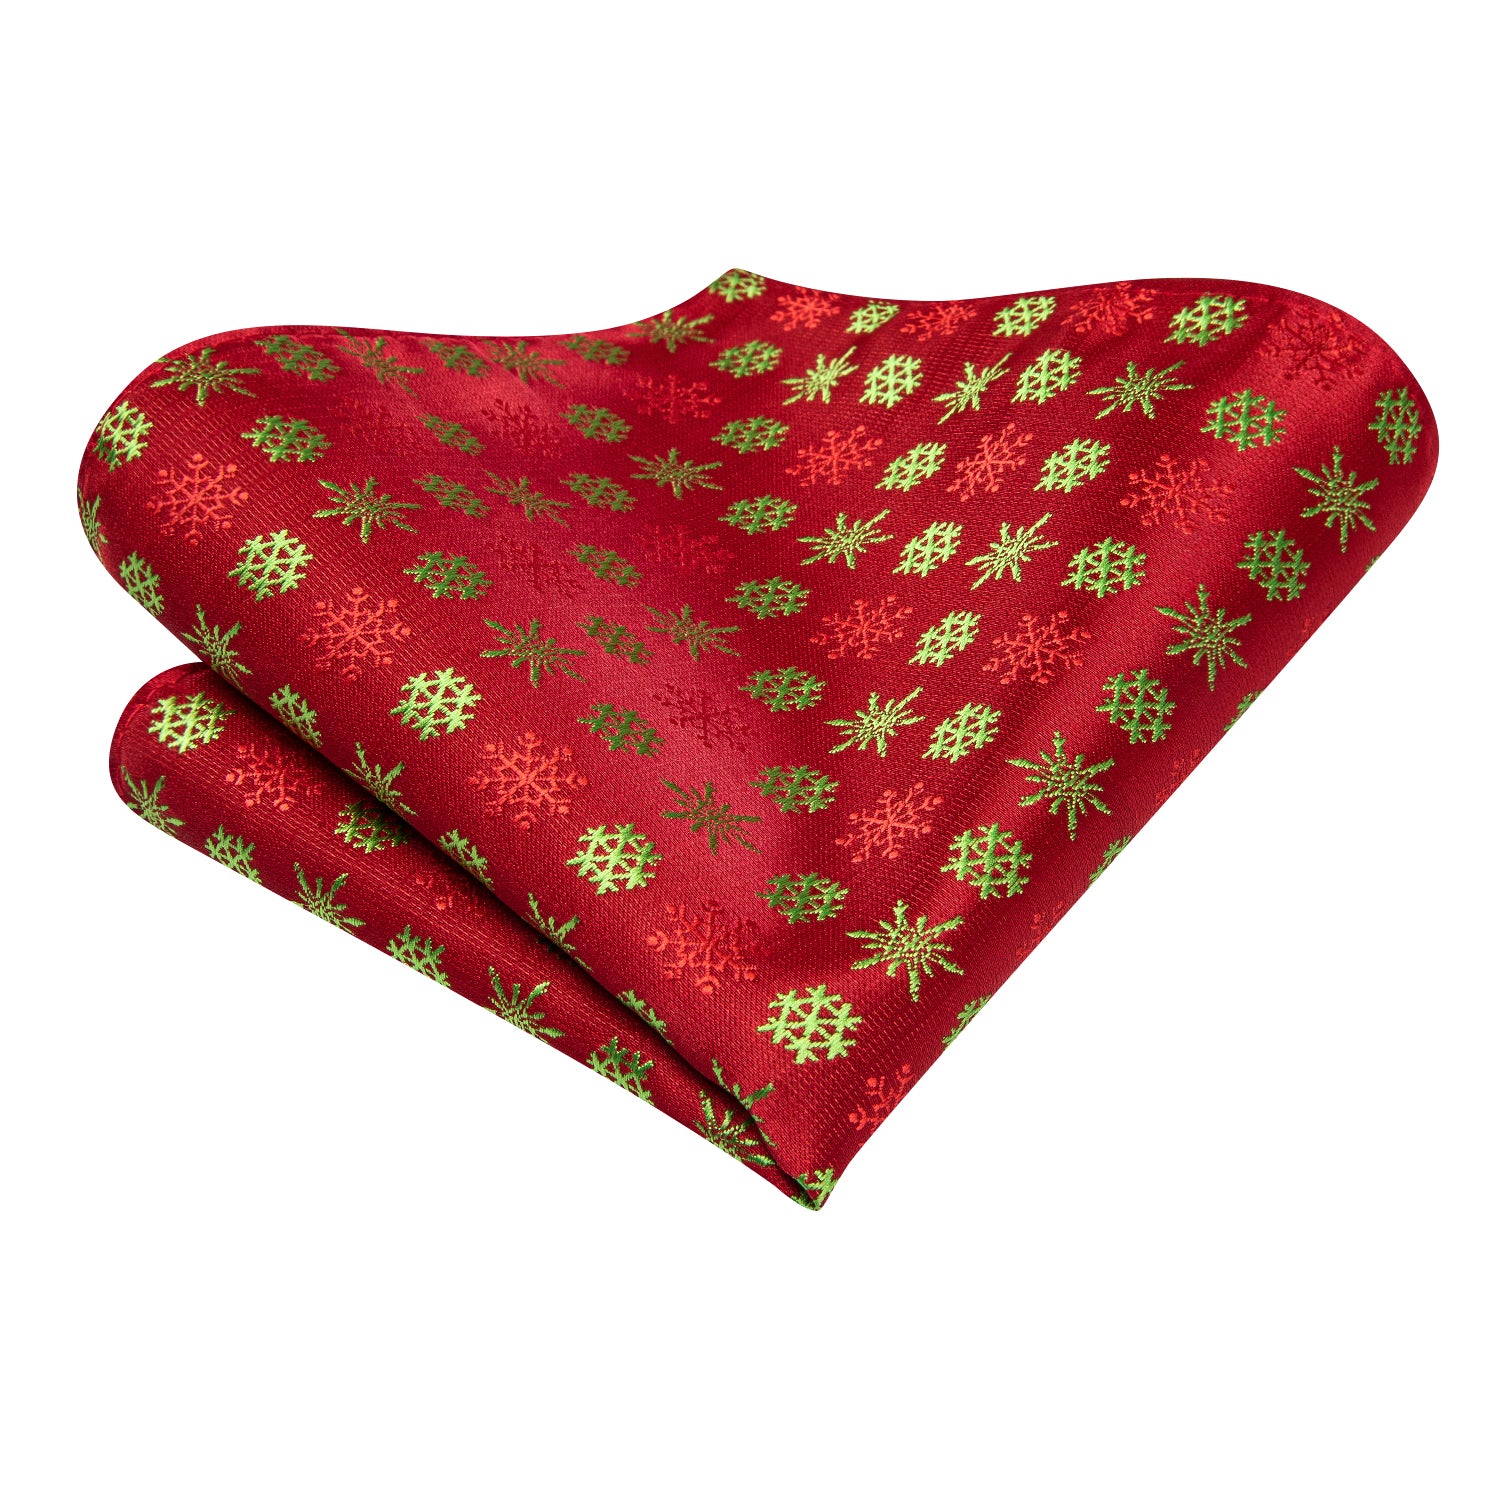 Christmas Red Snowflakes Men's Tie Pocket Square Cufflinks Set